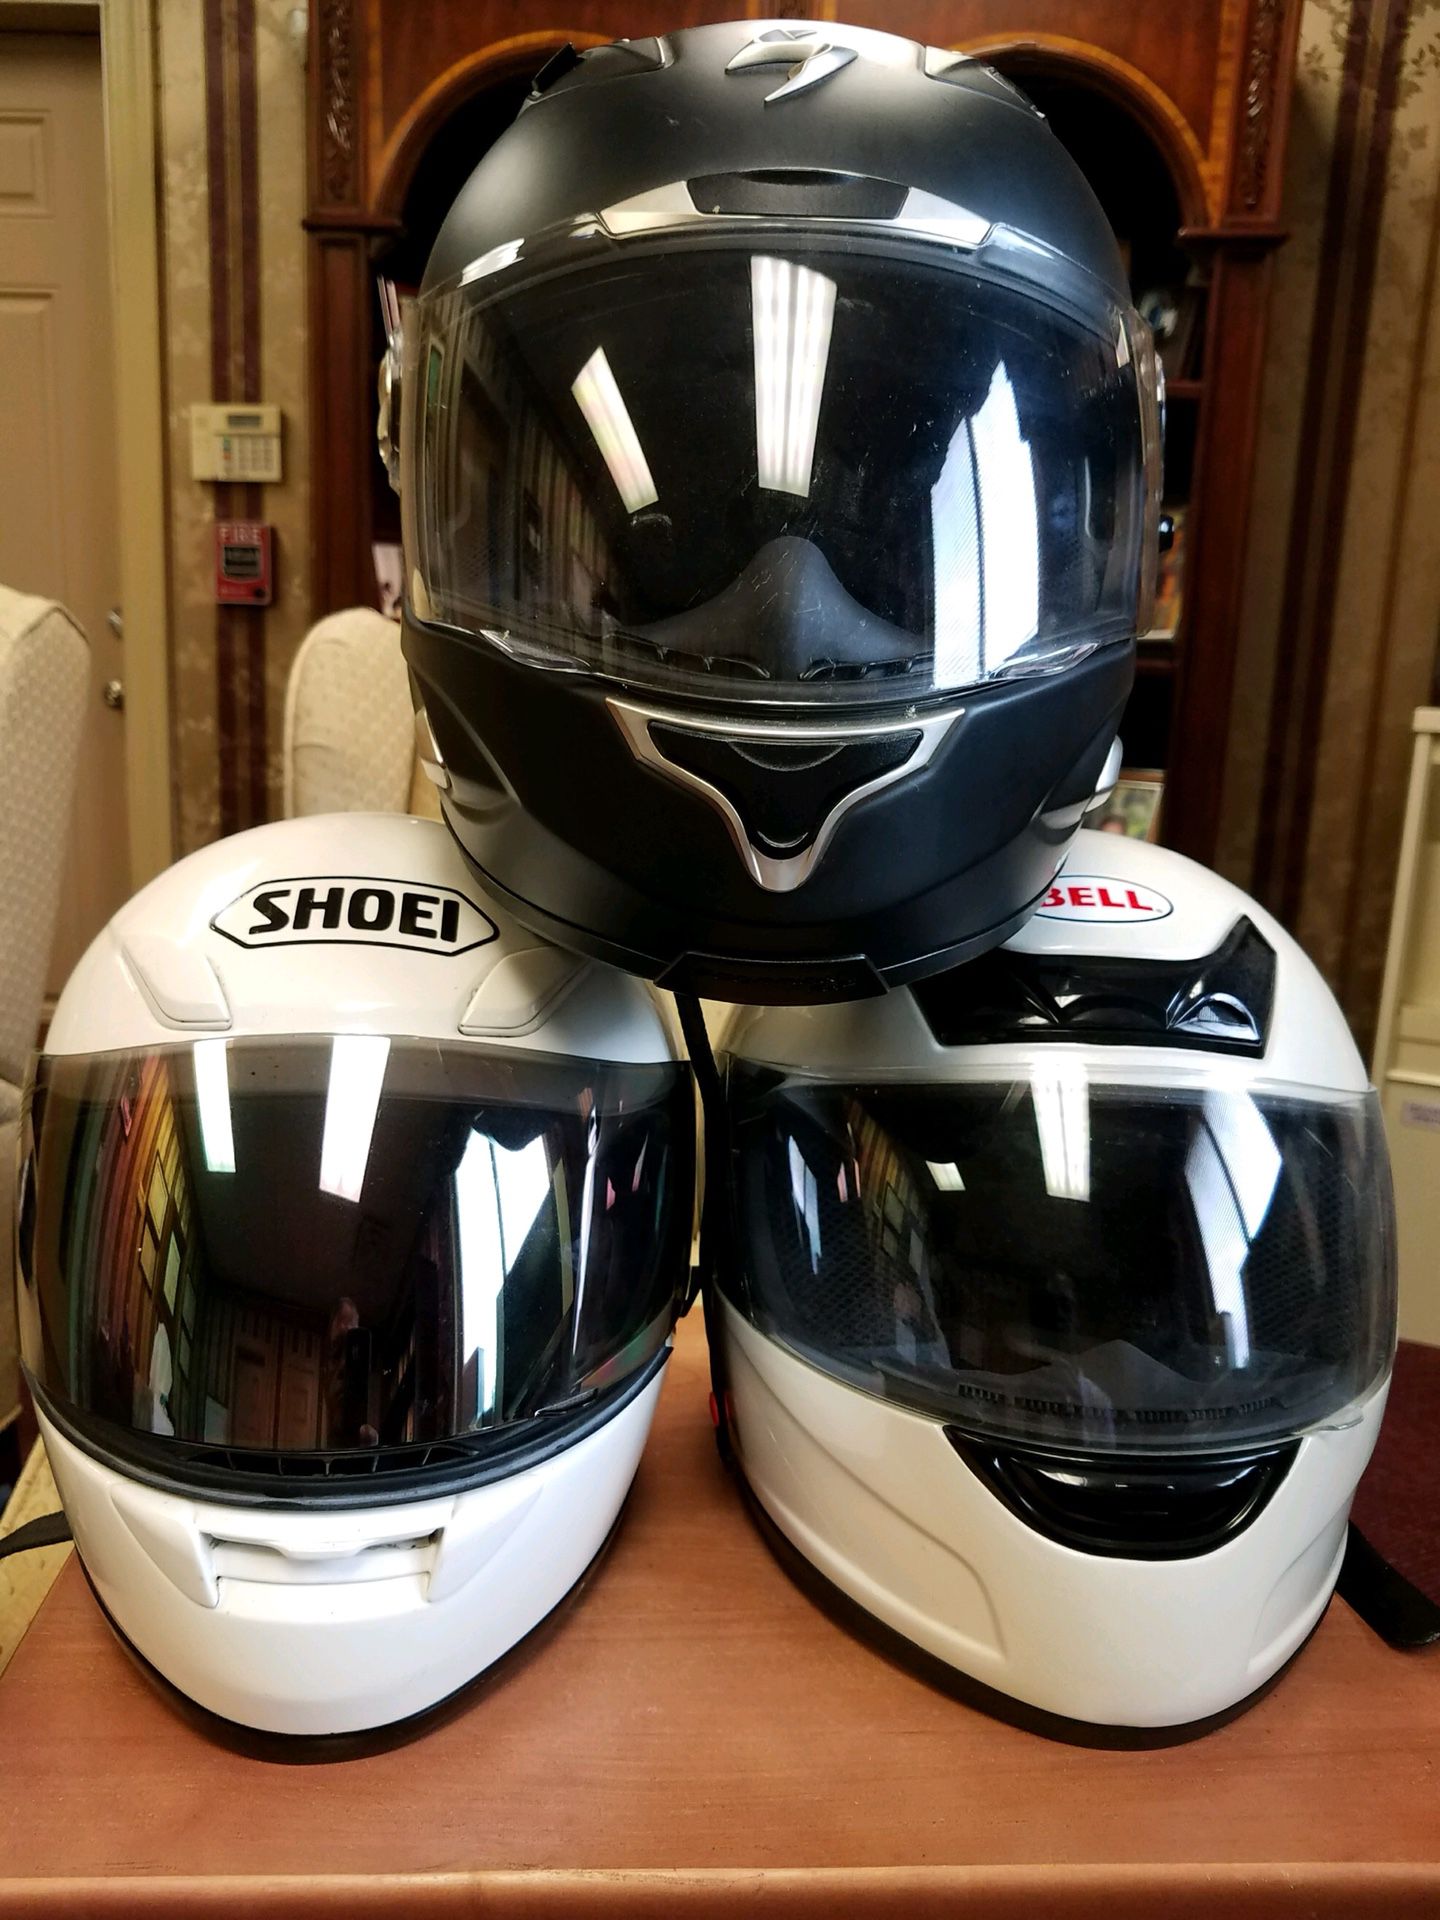 Motorcycle helmets; $75 a piece